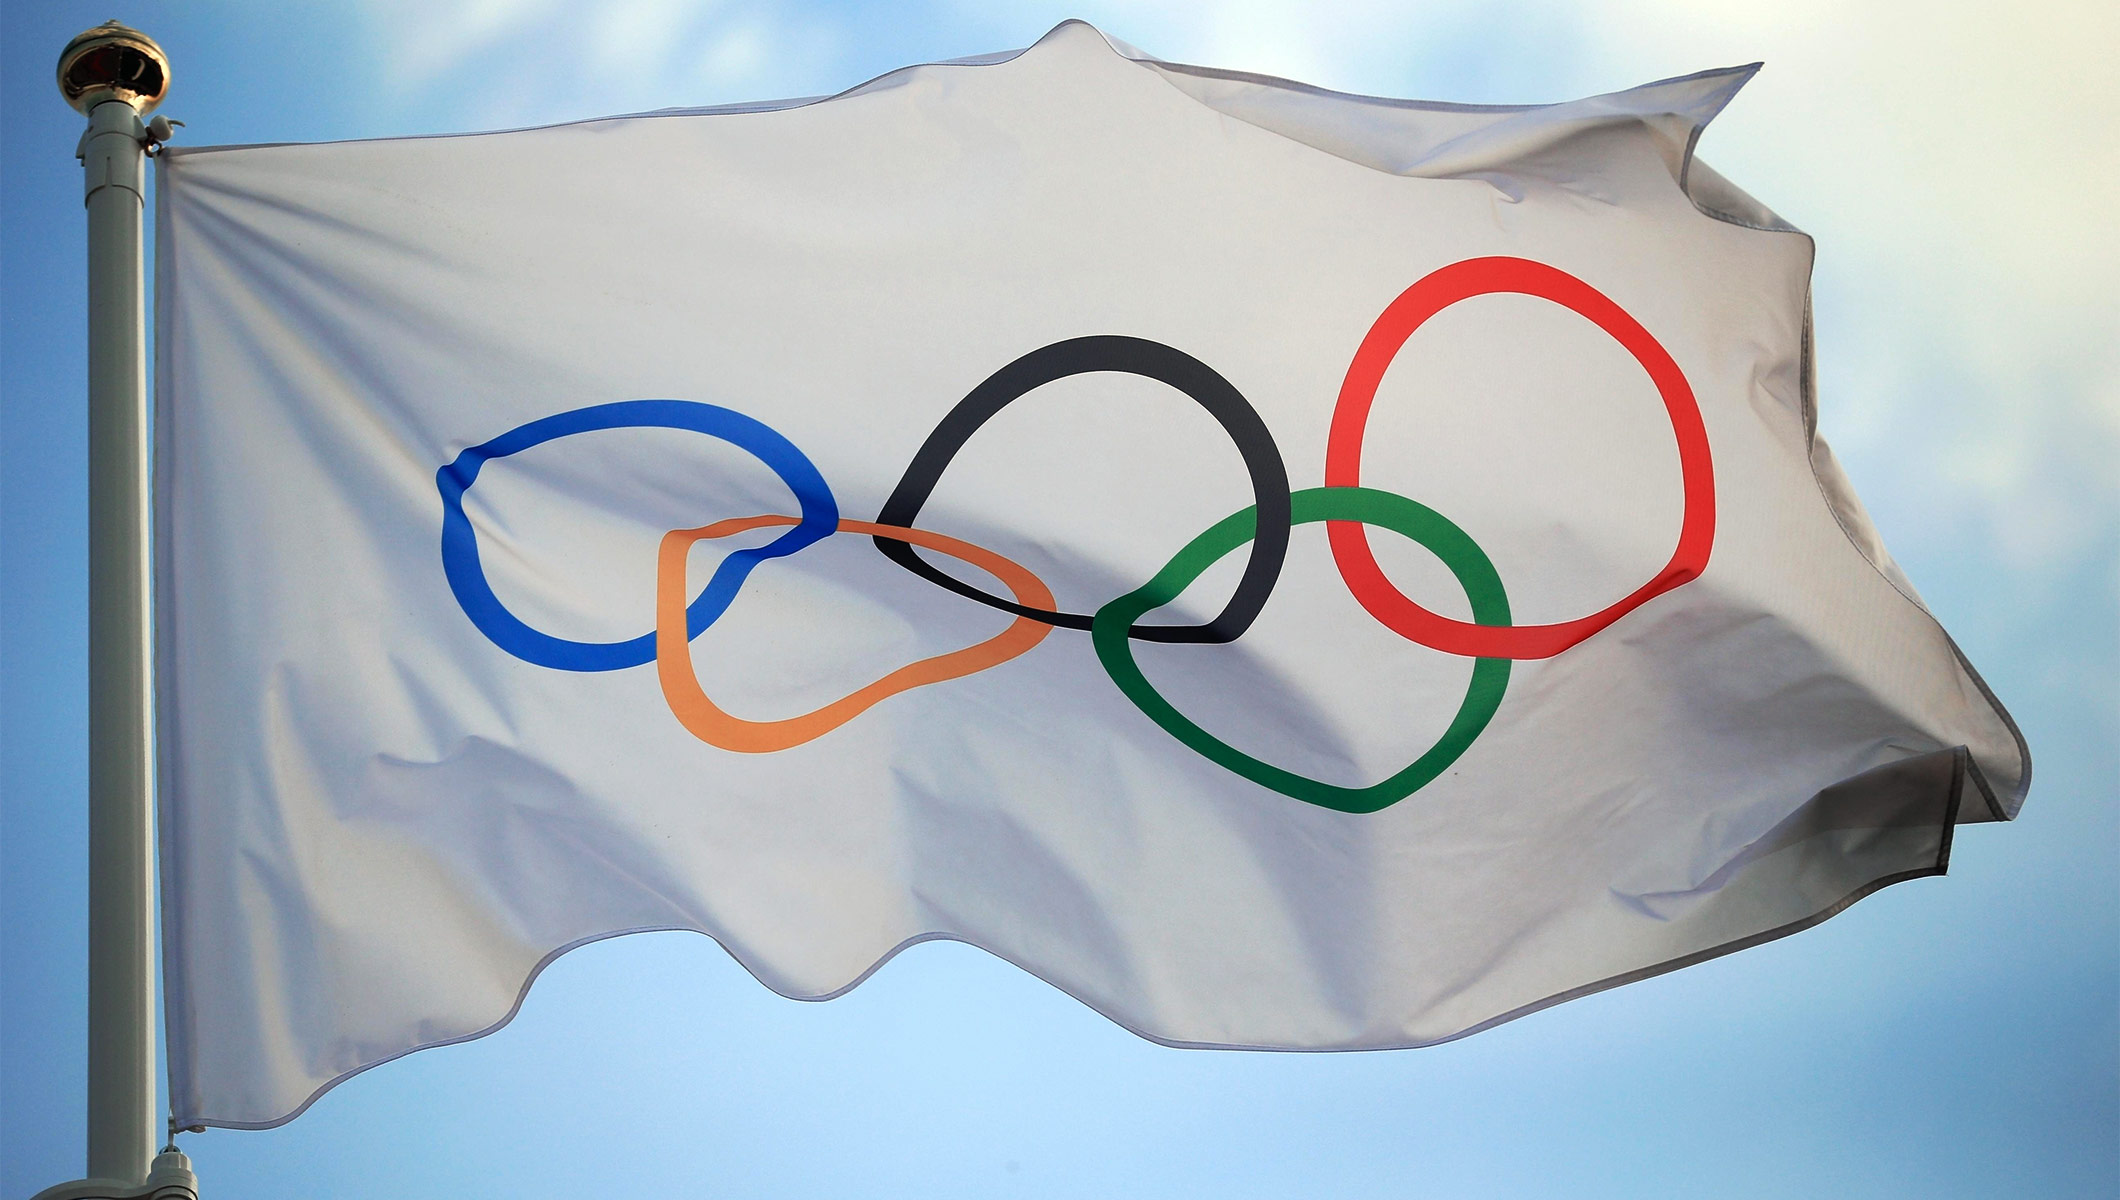 IOC president 'fully committed' to holding Olympics despite Coronavirus